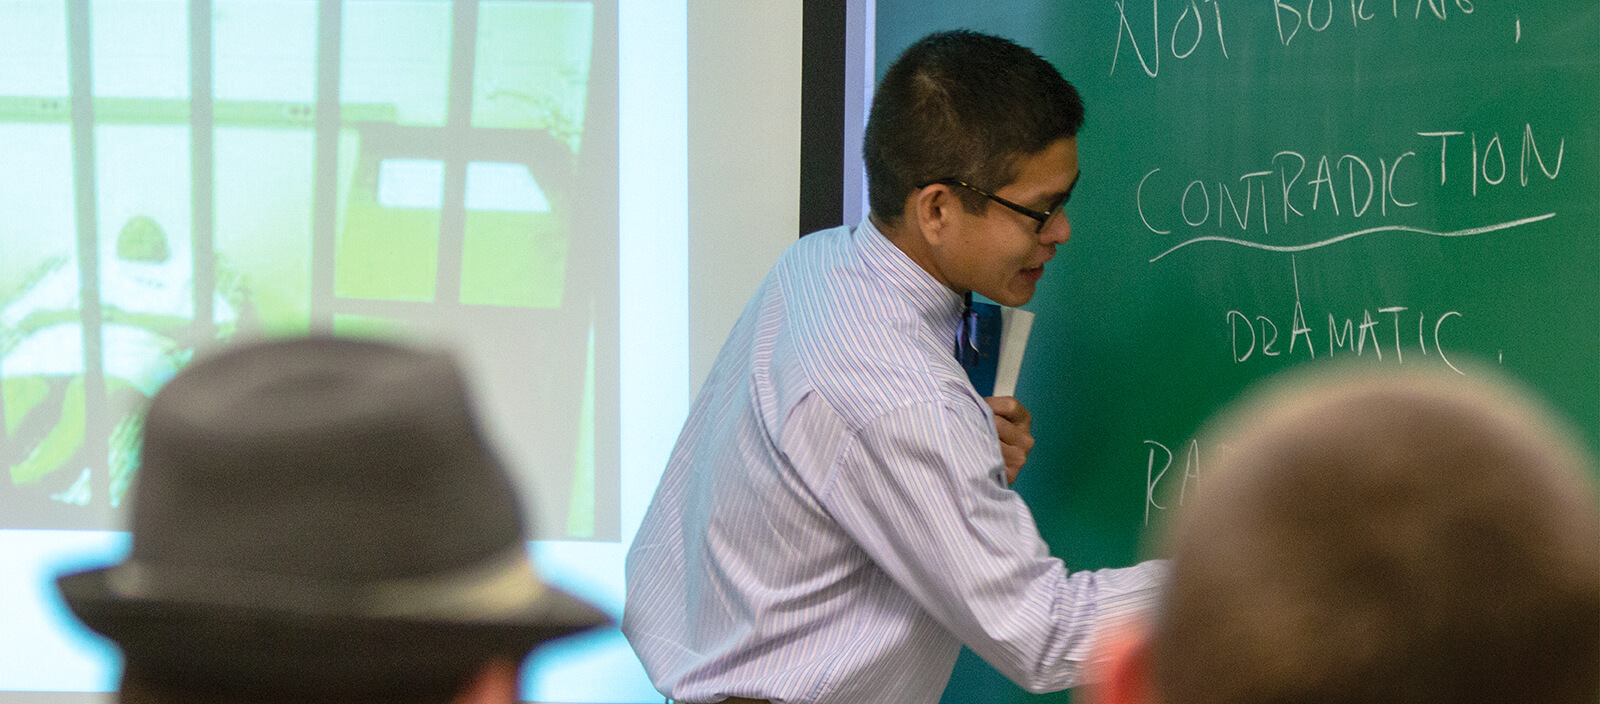 Professor Ben Chan writing on a chalk board in a classroom.